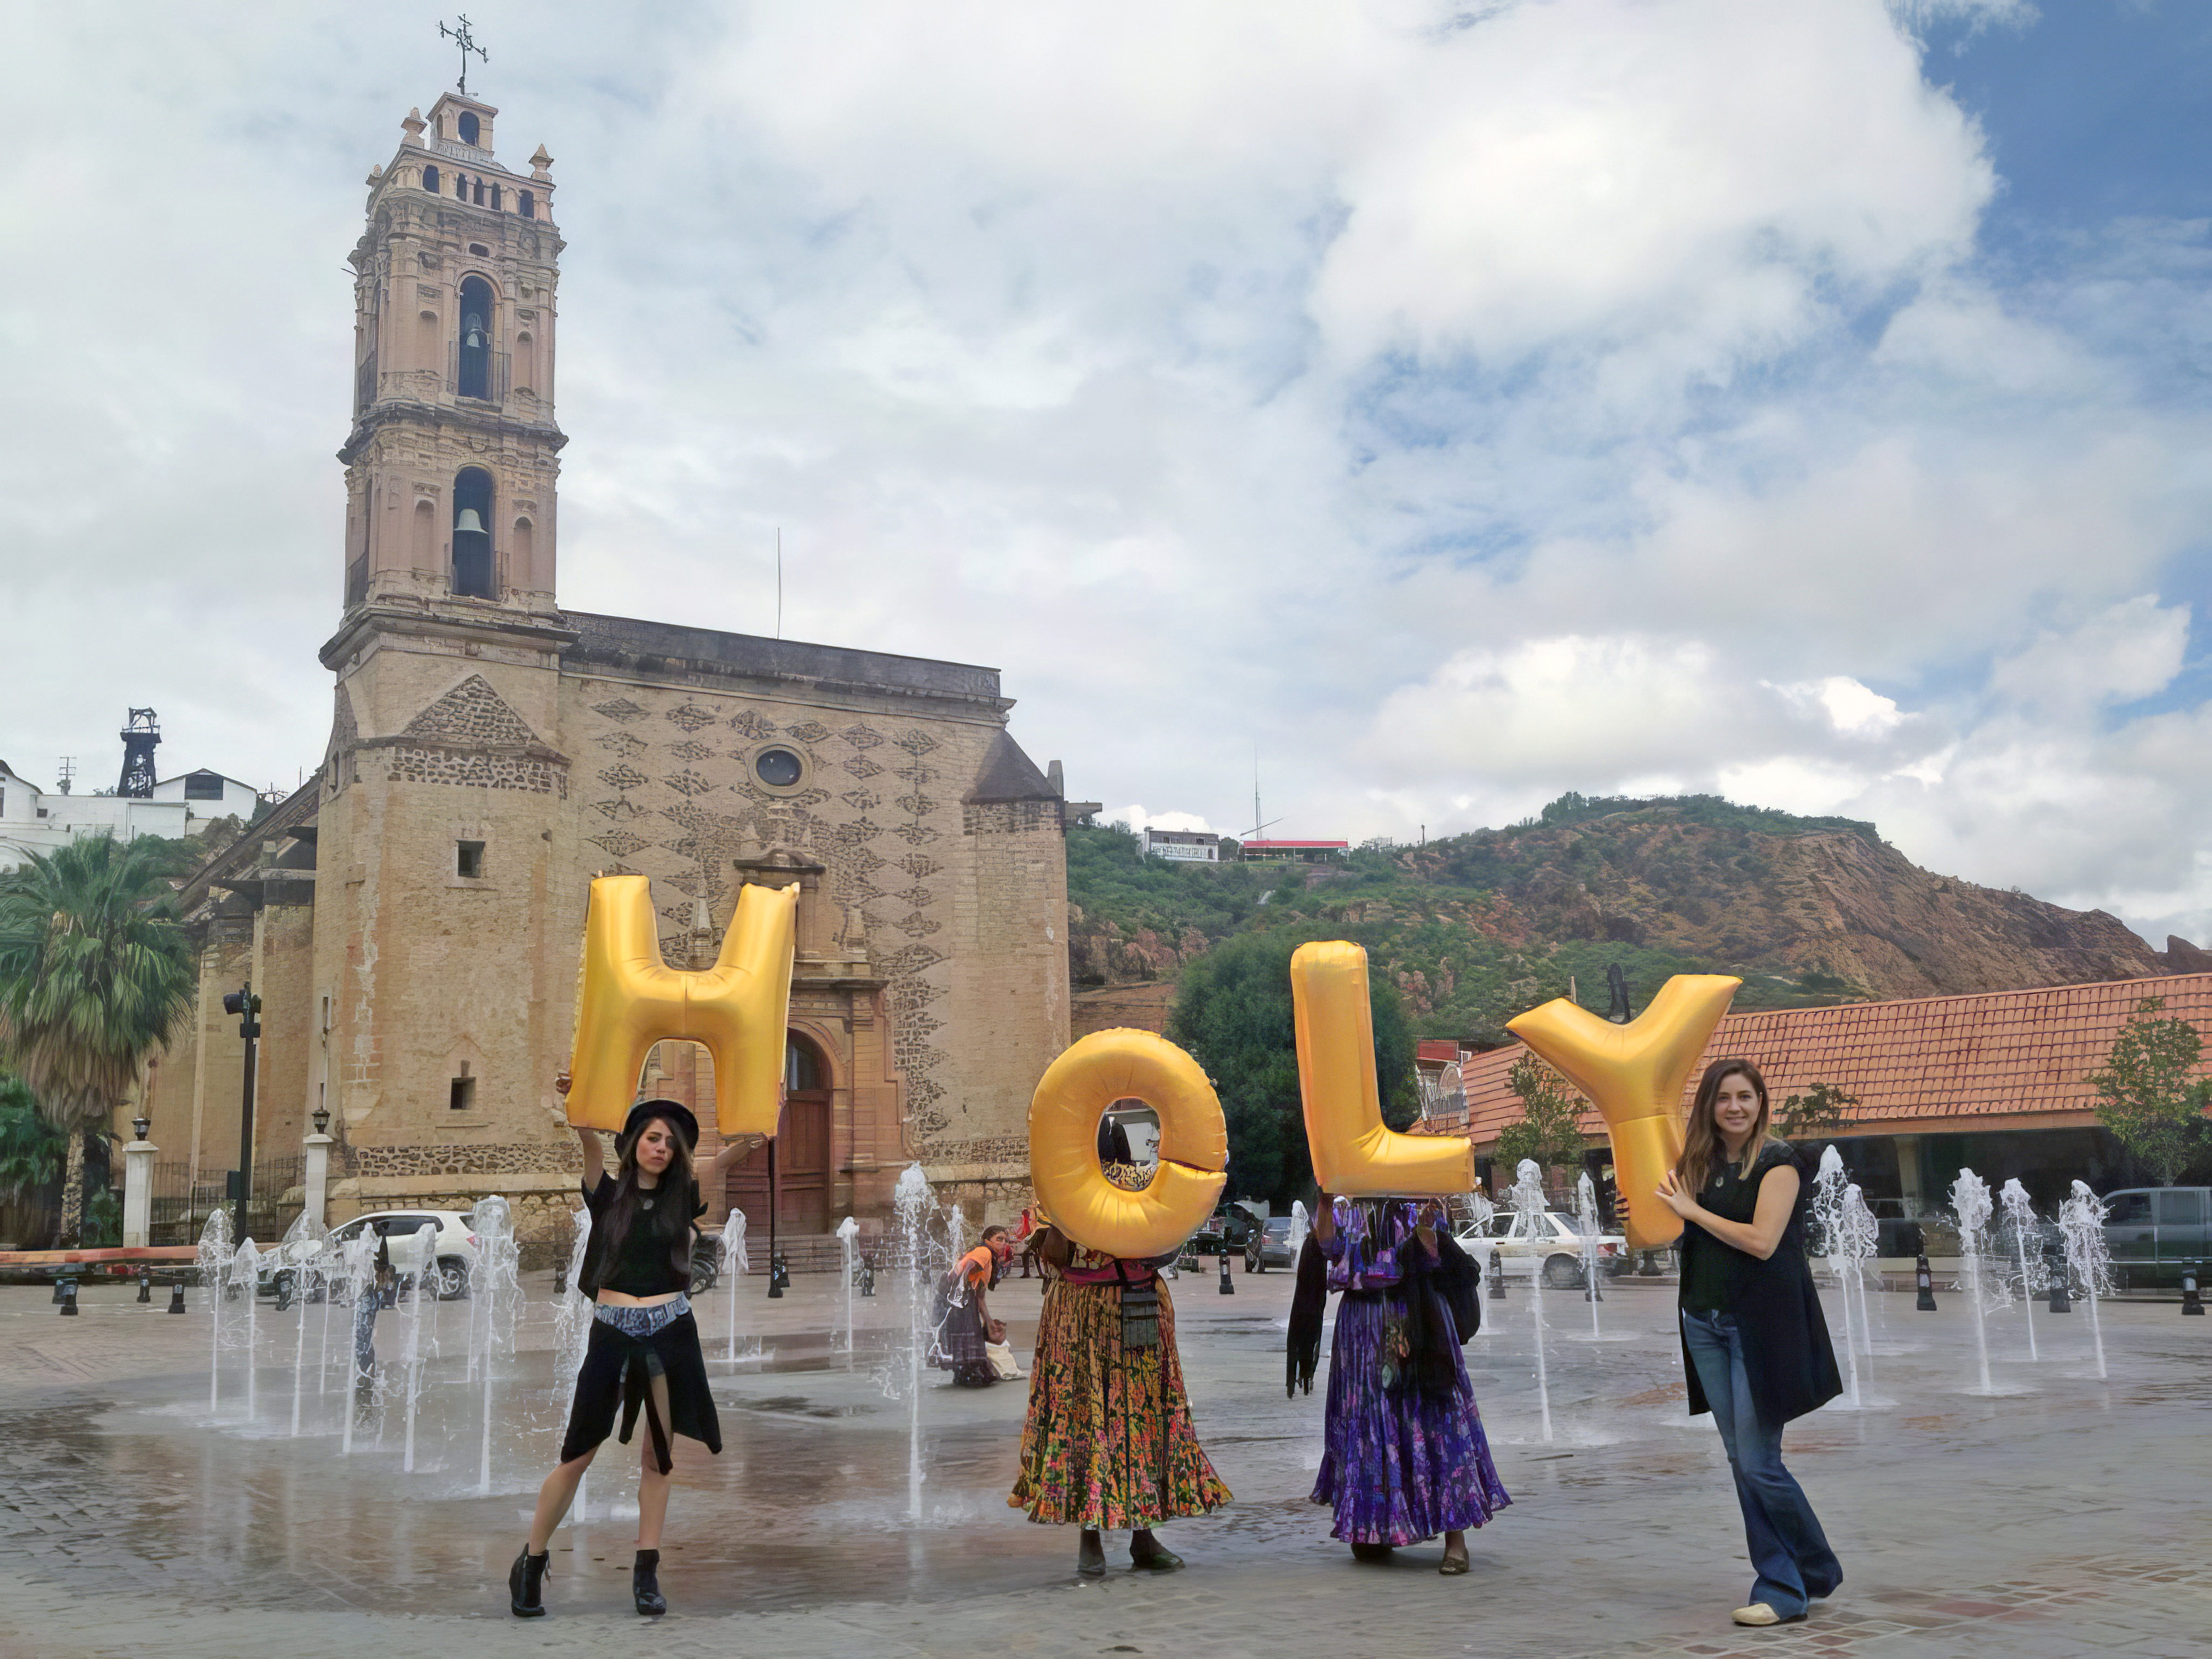 Mexico, Chihuahua, Plaza de la Identidad Parralense - Holy, Silence was Golden, gold balloons